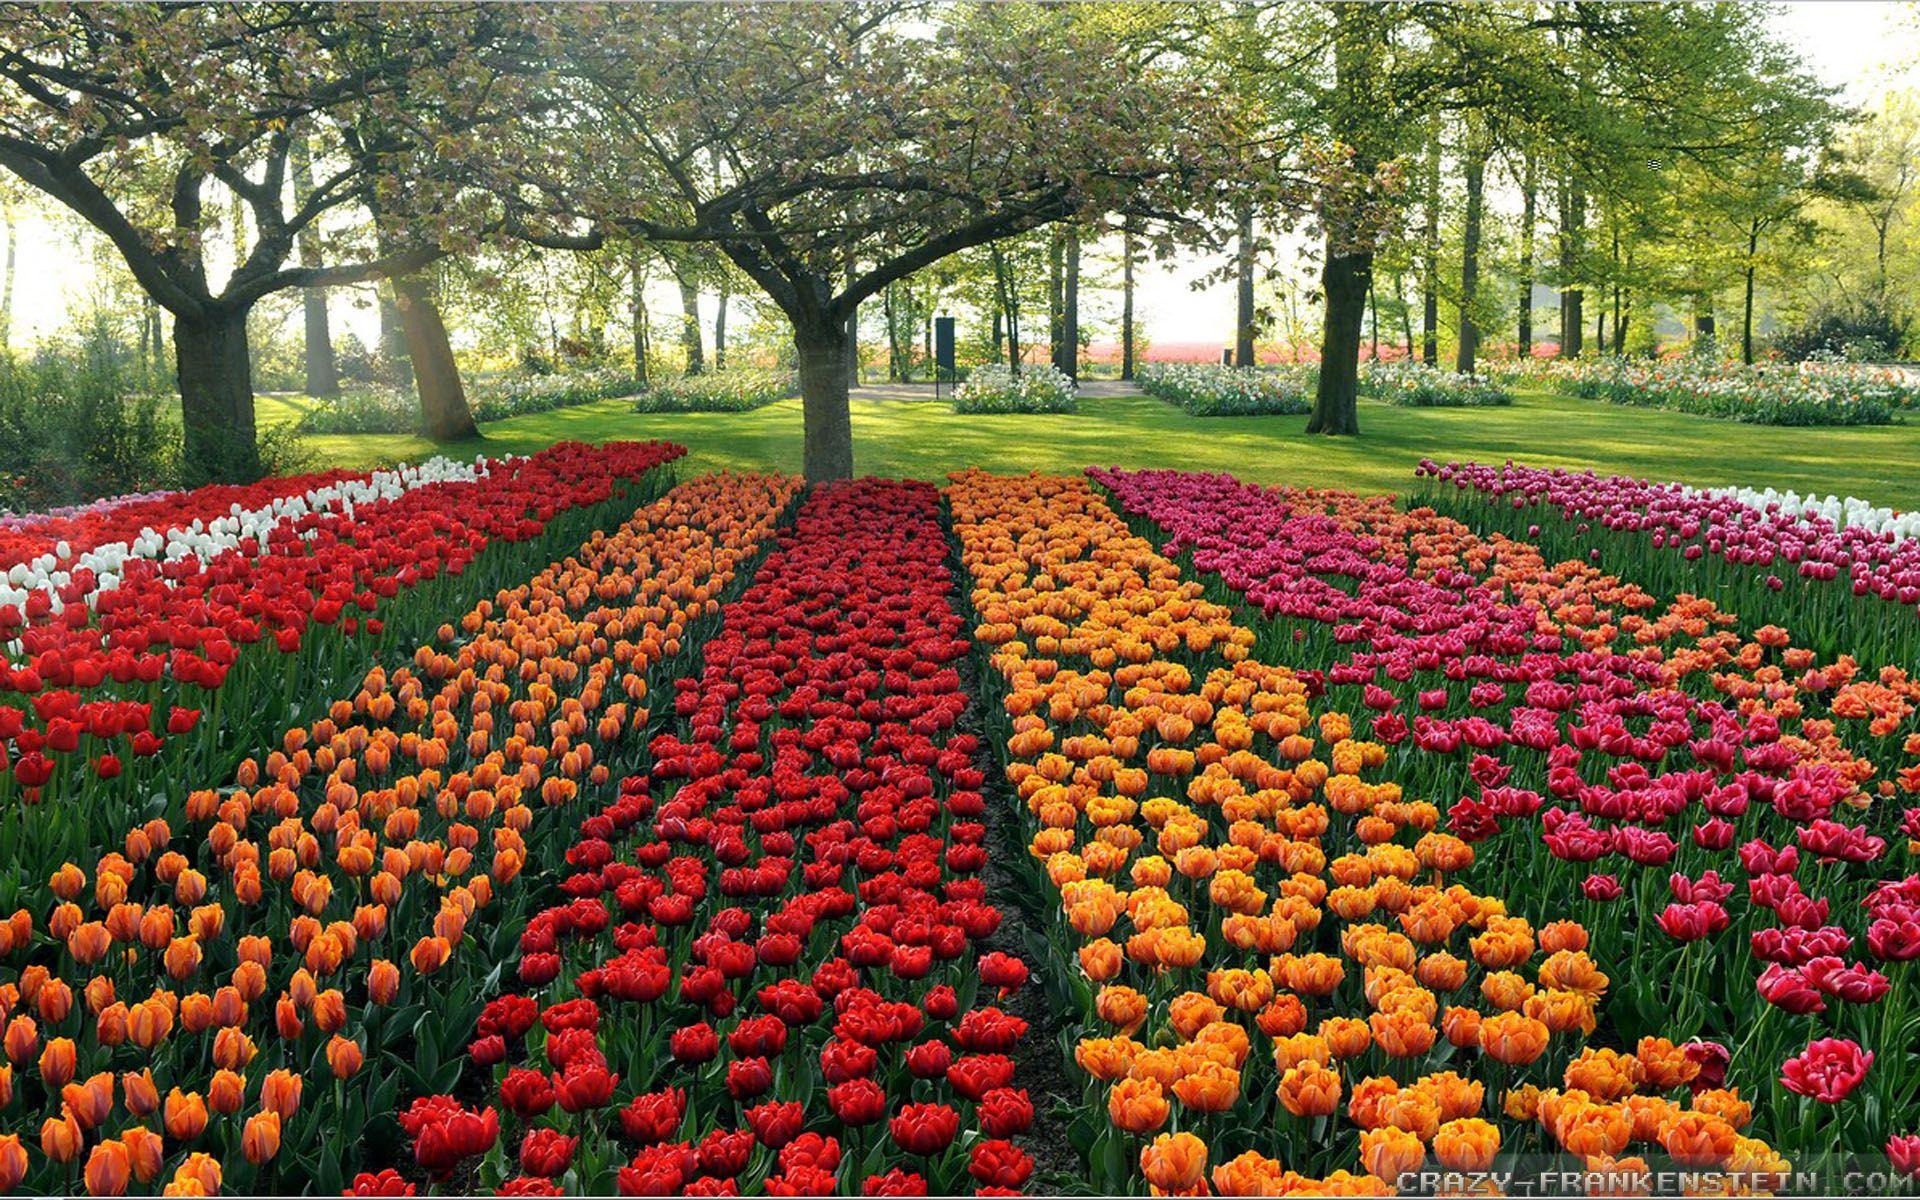 Flower Garden Wallpapers - Top Free Flower Garden Backgrounds